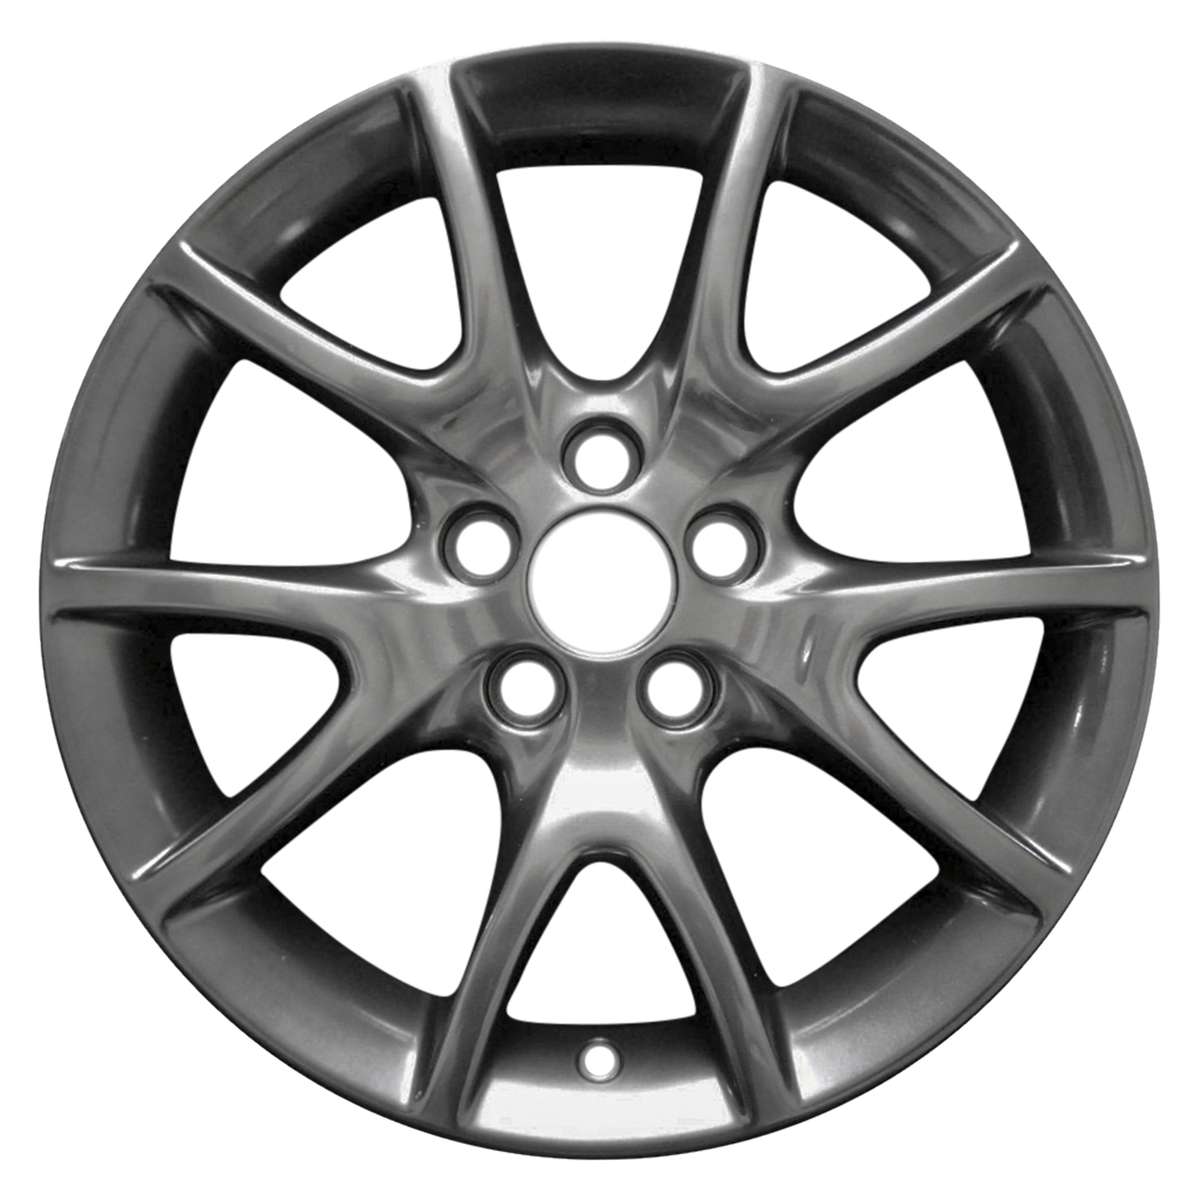 2015 Dodge Dart 17" OEM Wheel Rim W2445H